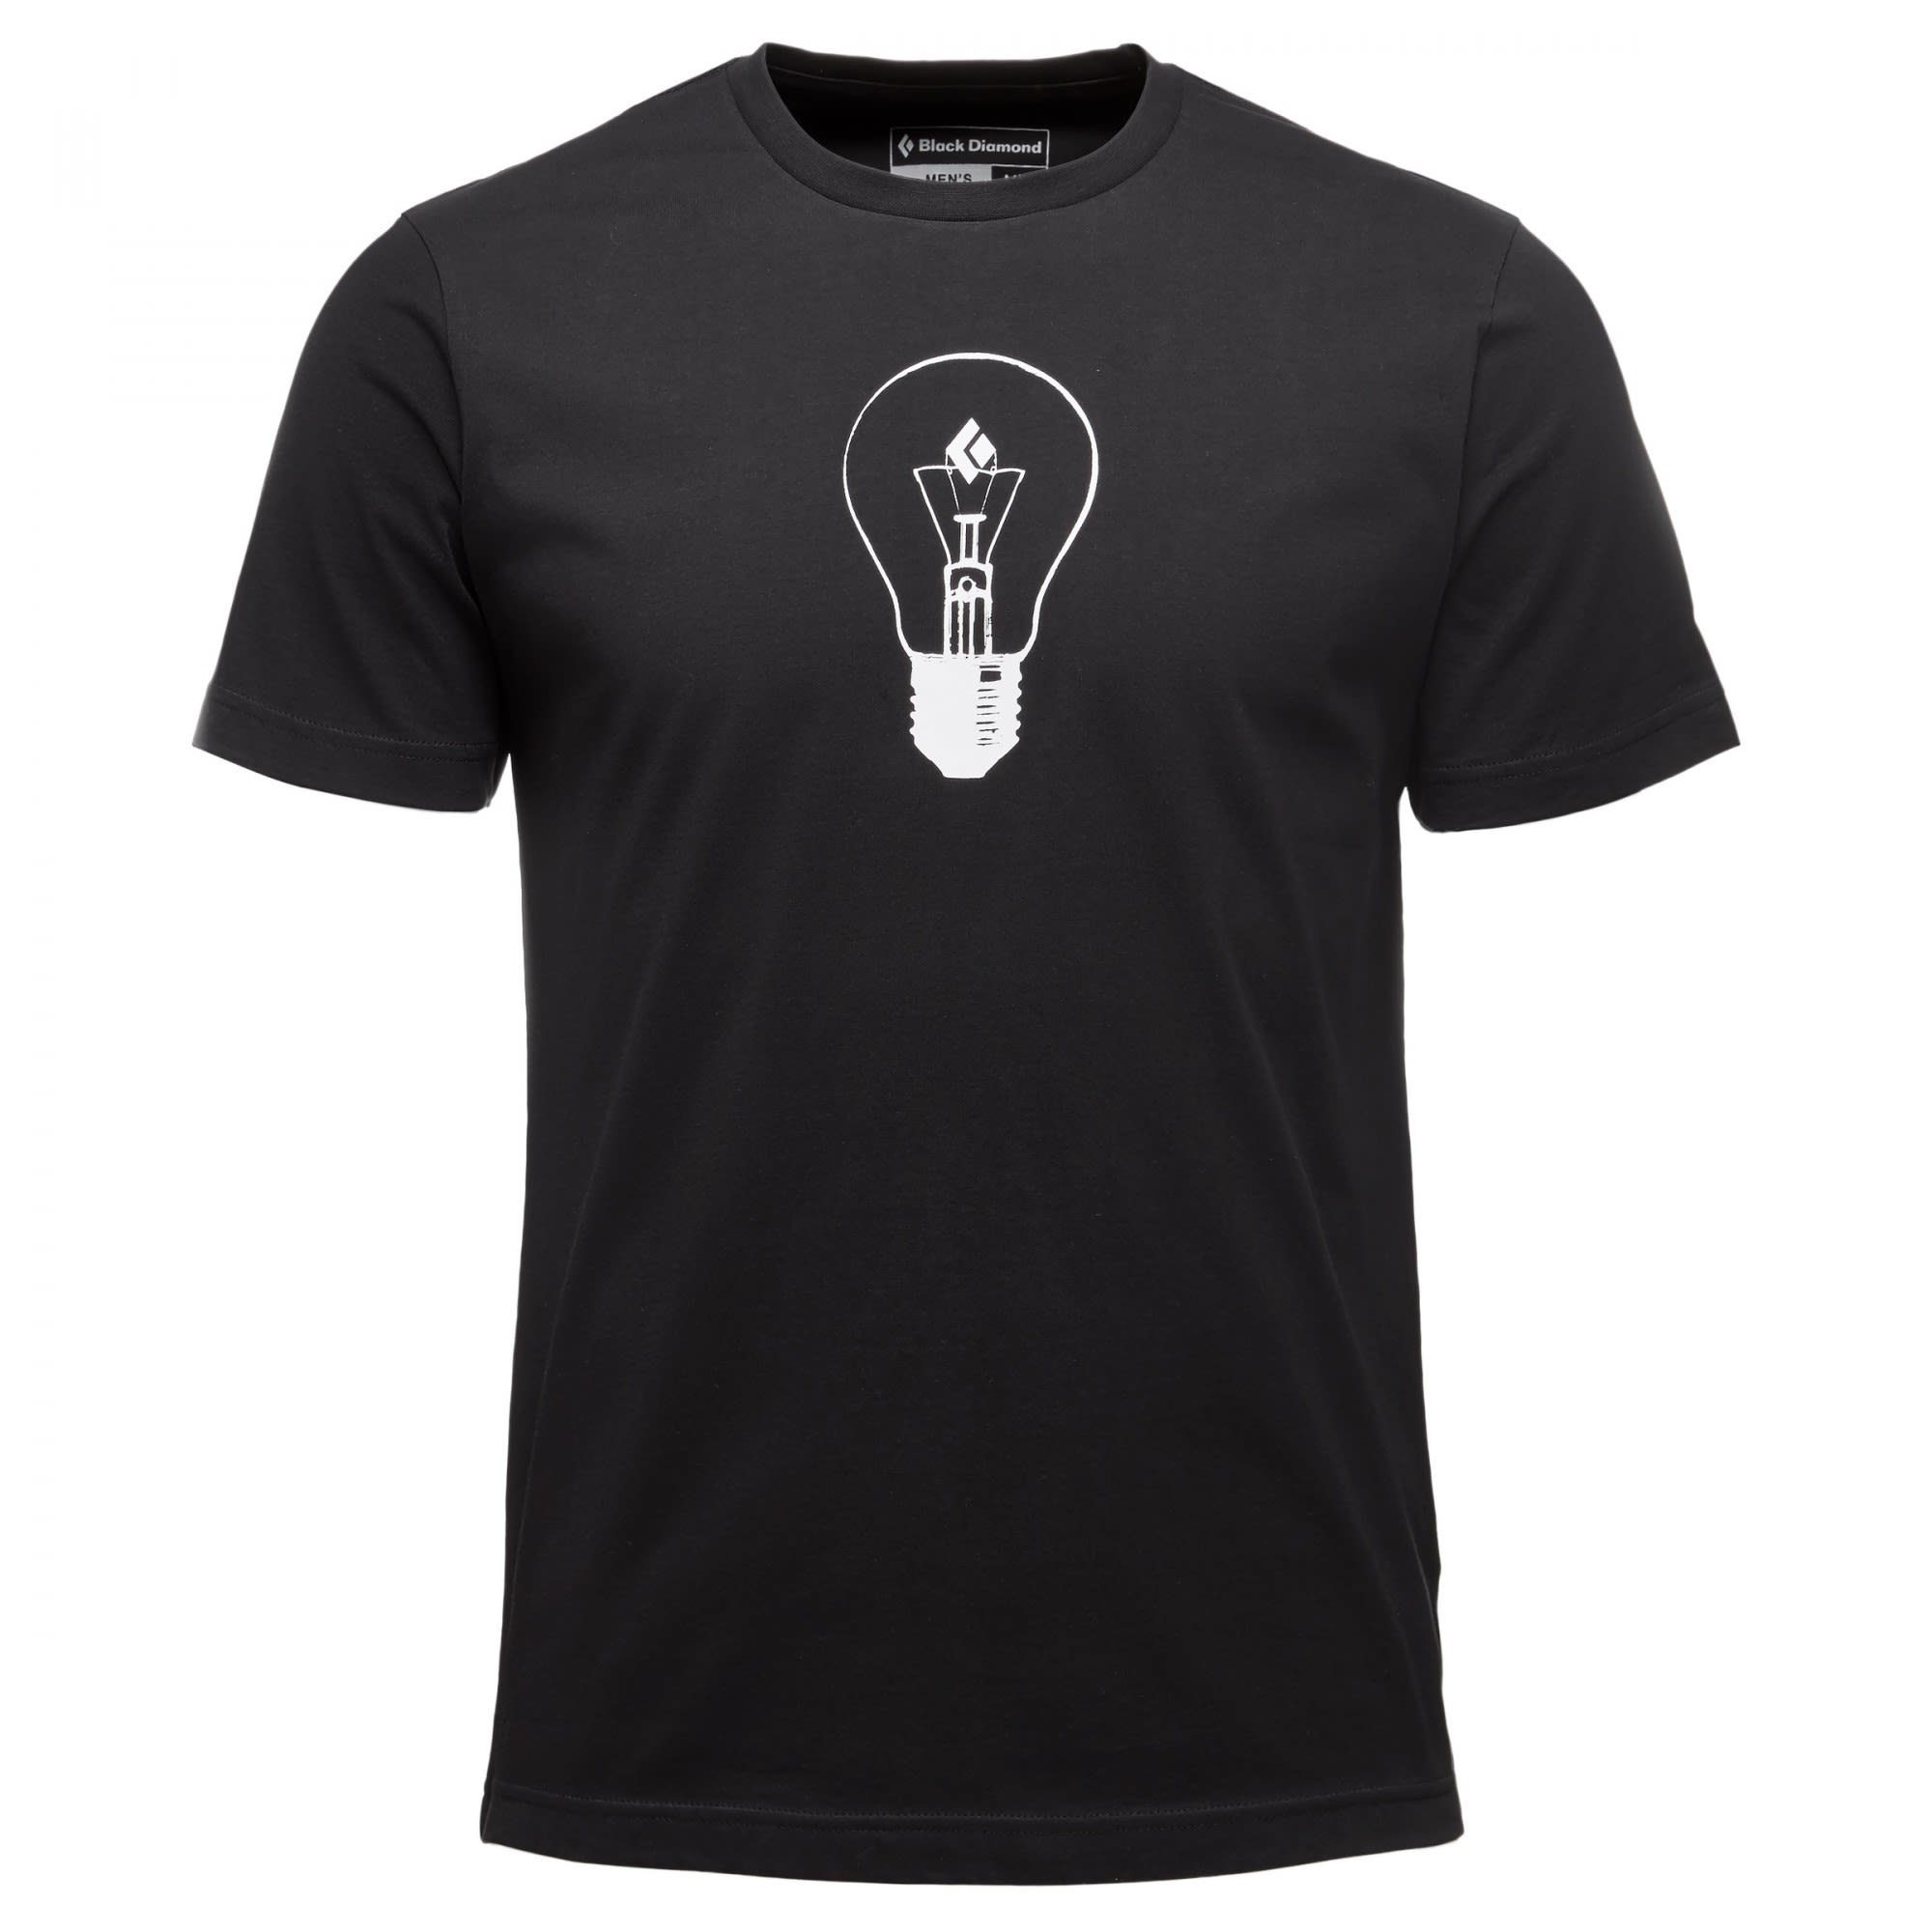 Black Diamond T-Shirt Black Diamond M S/s Idea Tee Herren Kurzarm-Shirt